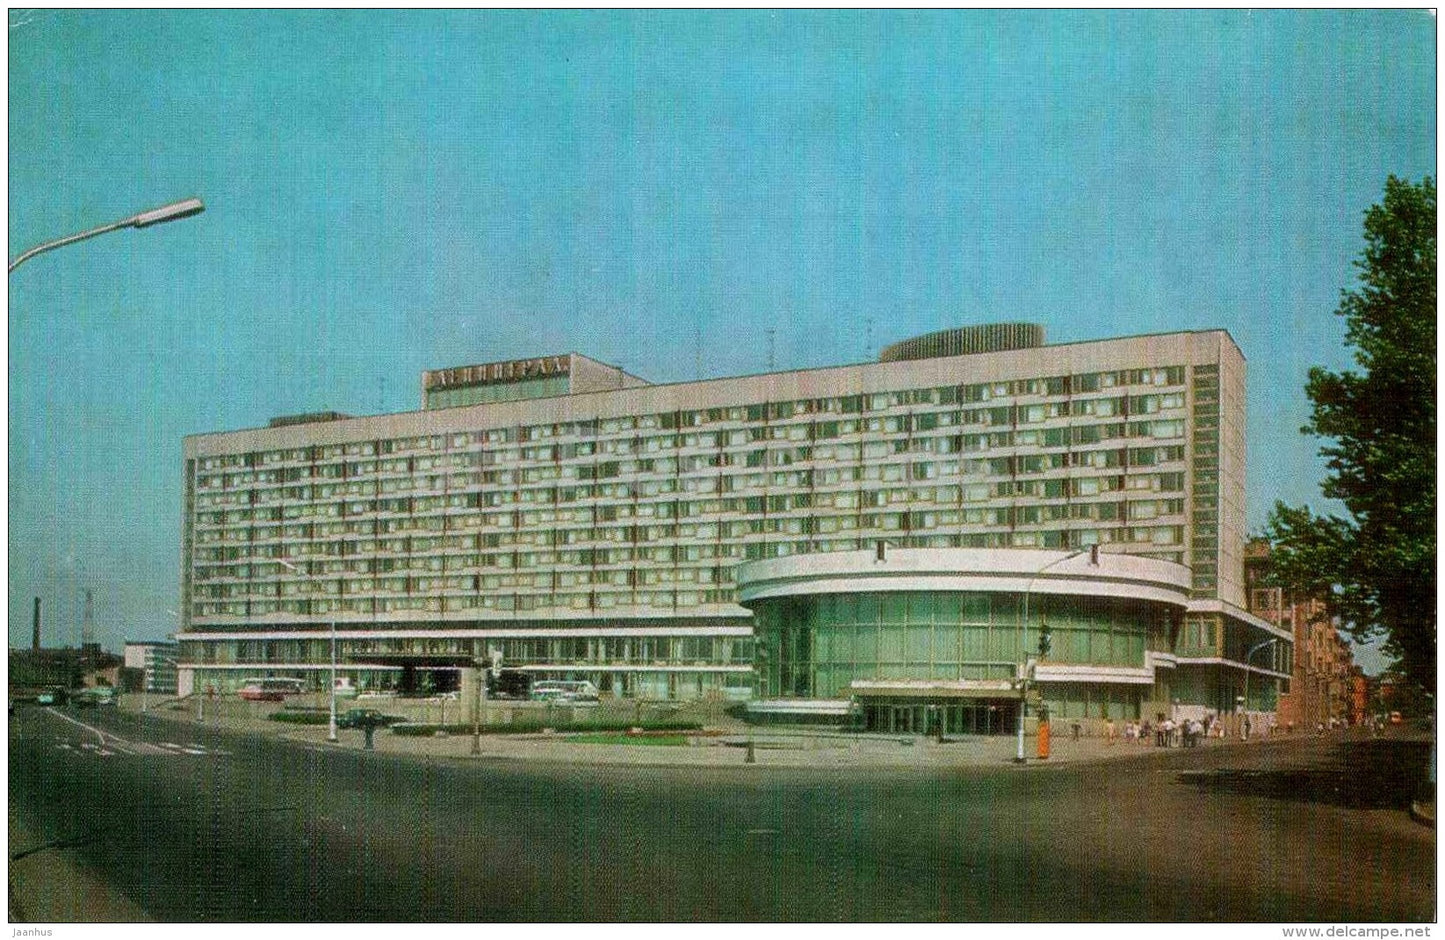 The Leningrad Hotel - Leningrad - St. Petersburg - 1975 - Russia USSR - unused - JH Postcards